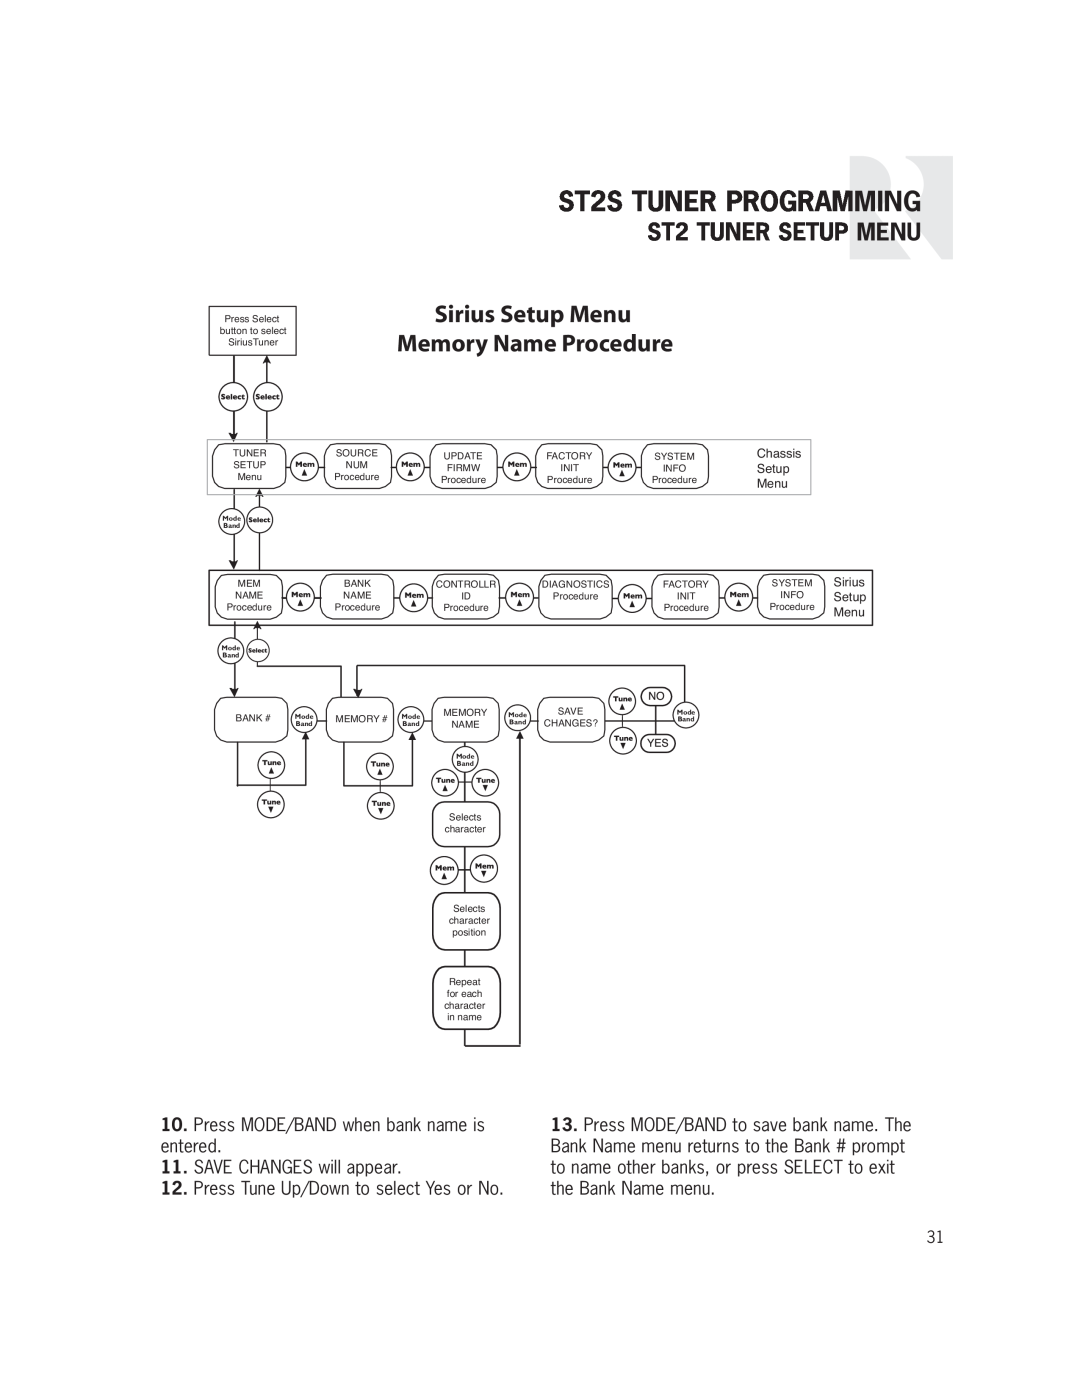 Russound installation manual ST2S TUNER PROGRAMMING, Sirius Setup Menu Memory Name Procedure, ST2 TUNER SETUP MENU 